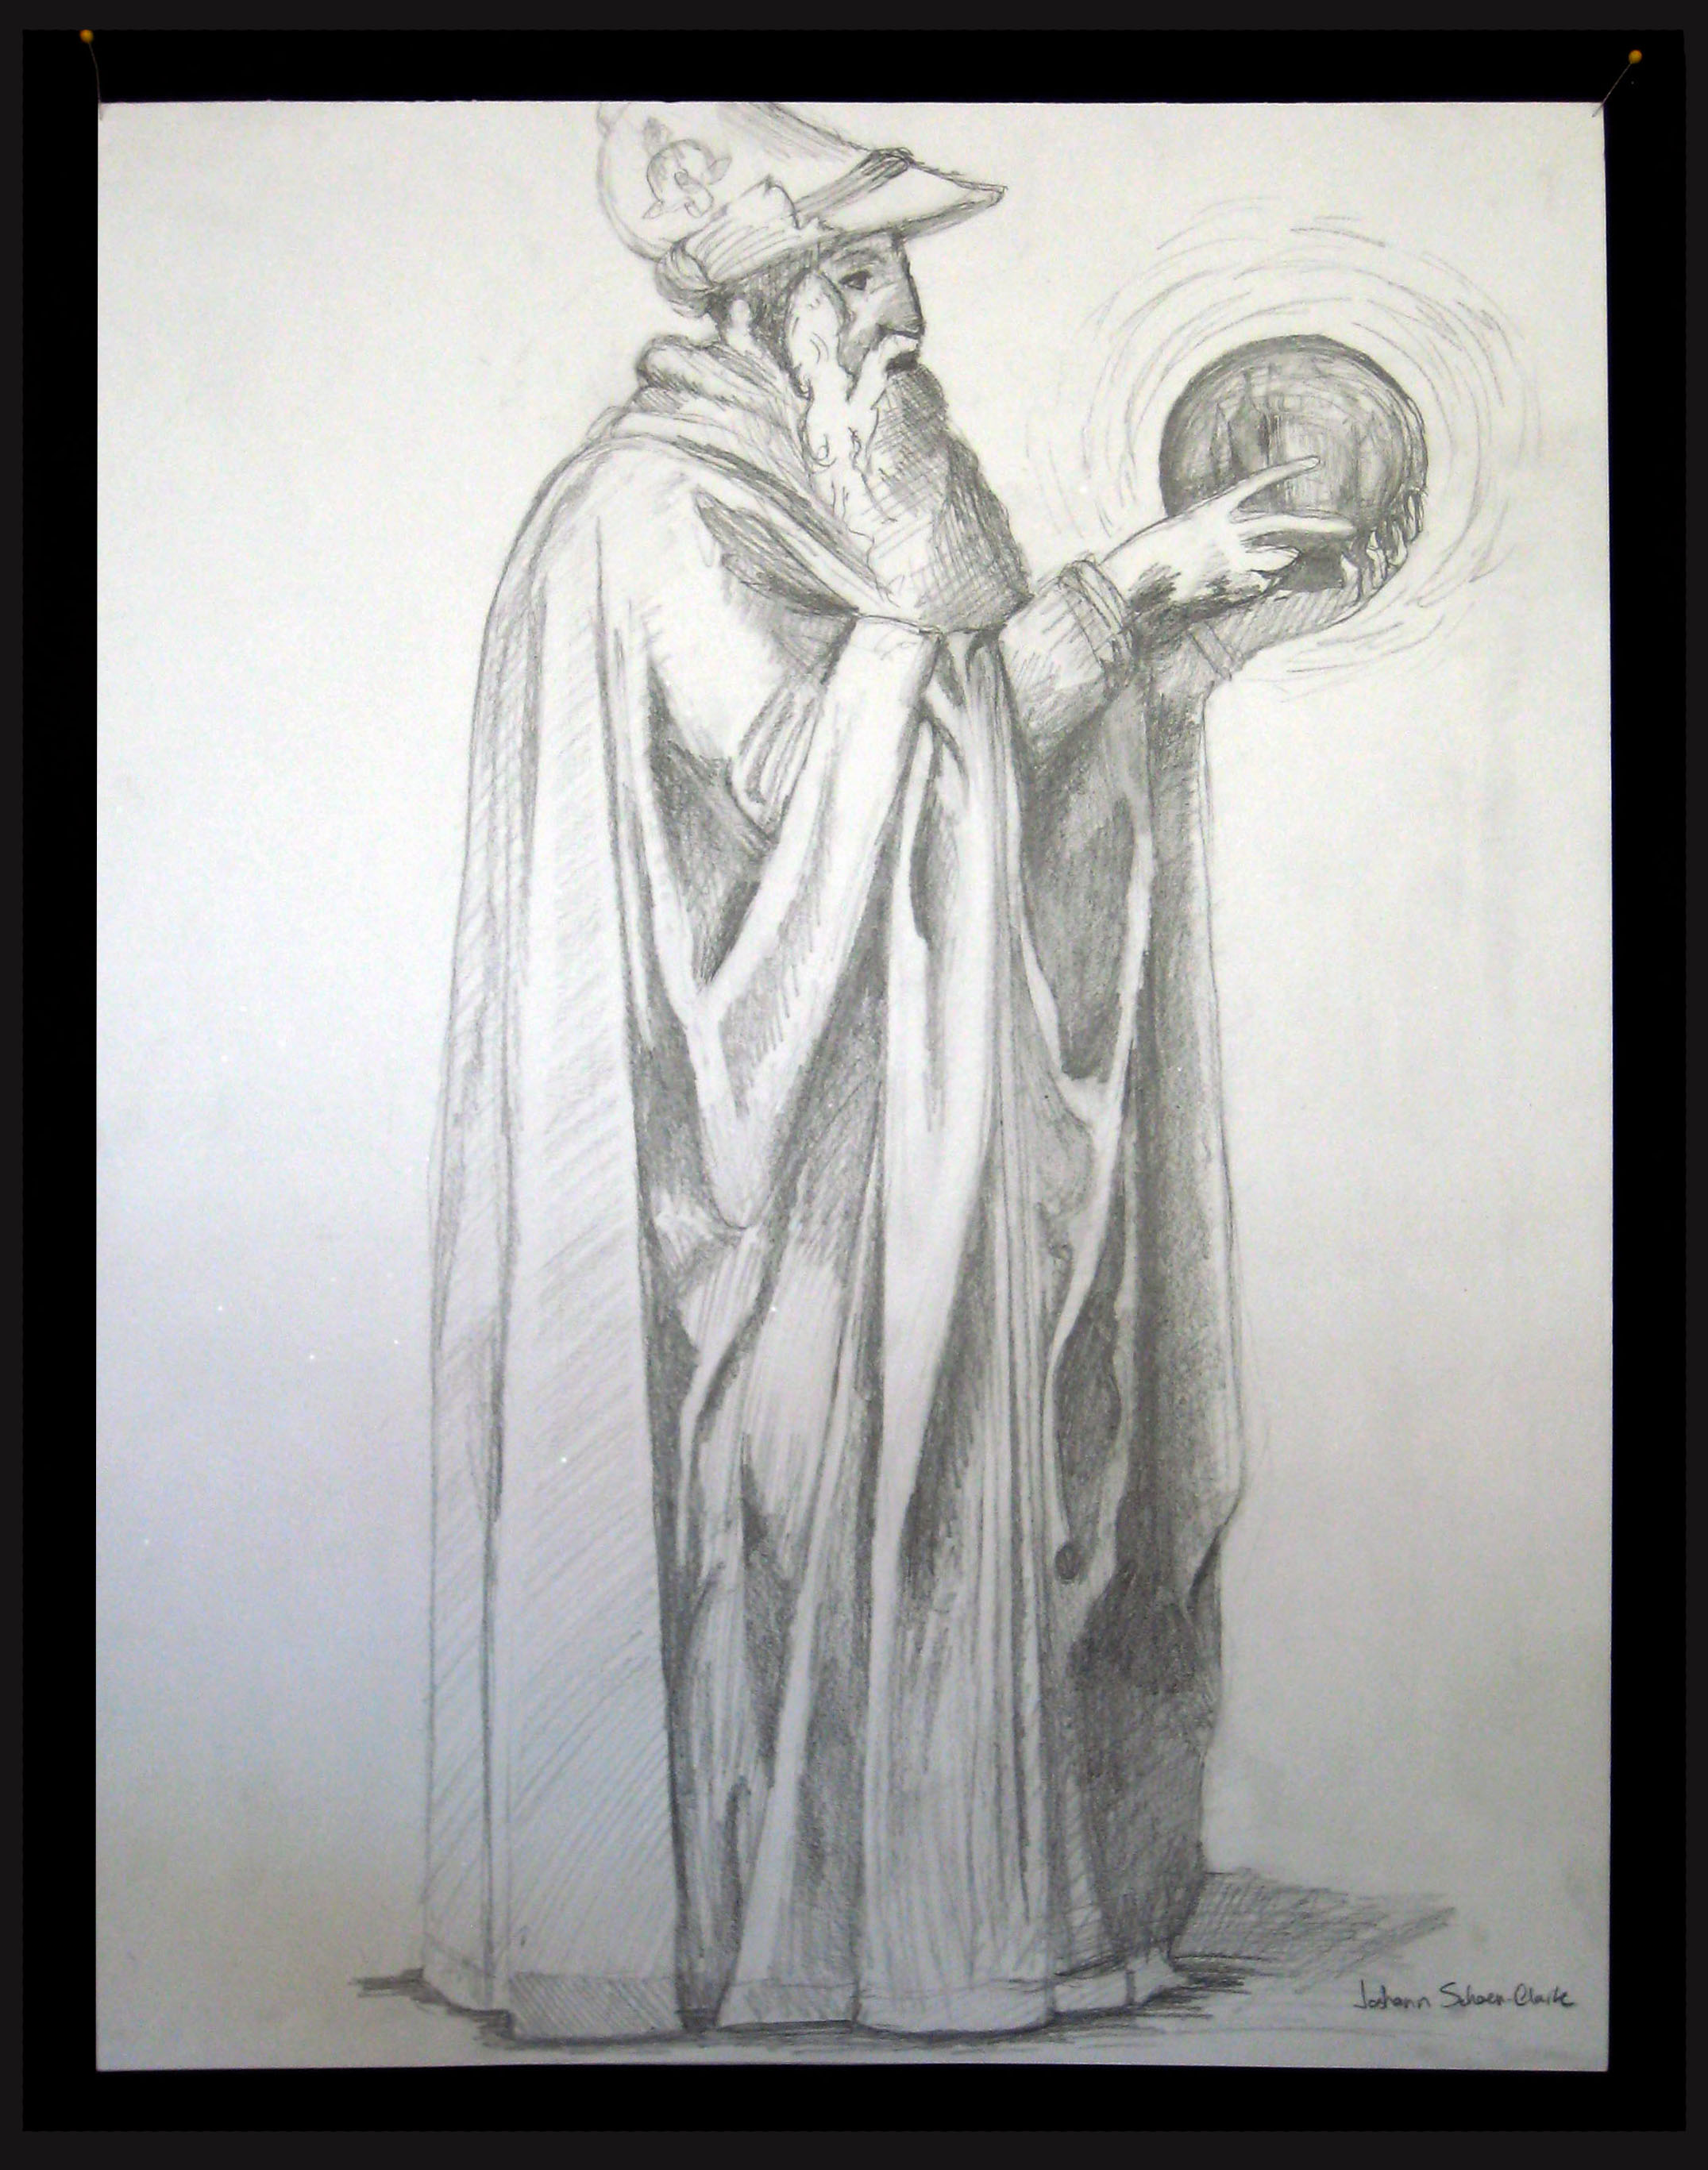 Joshann drawing of a Philosopher Graphite